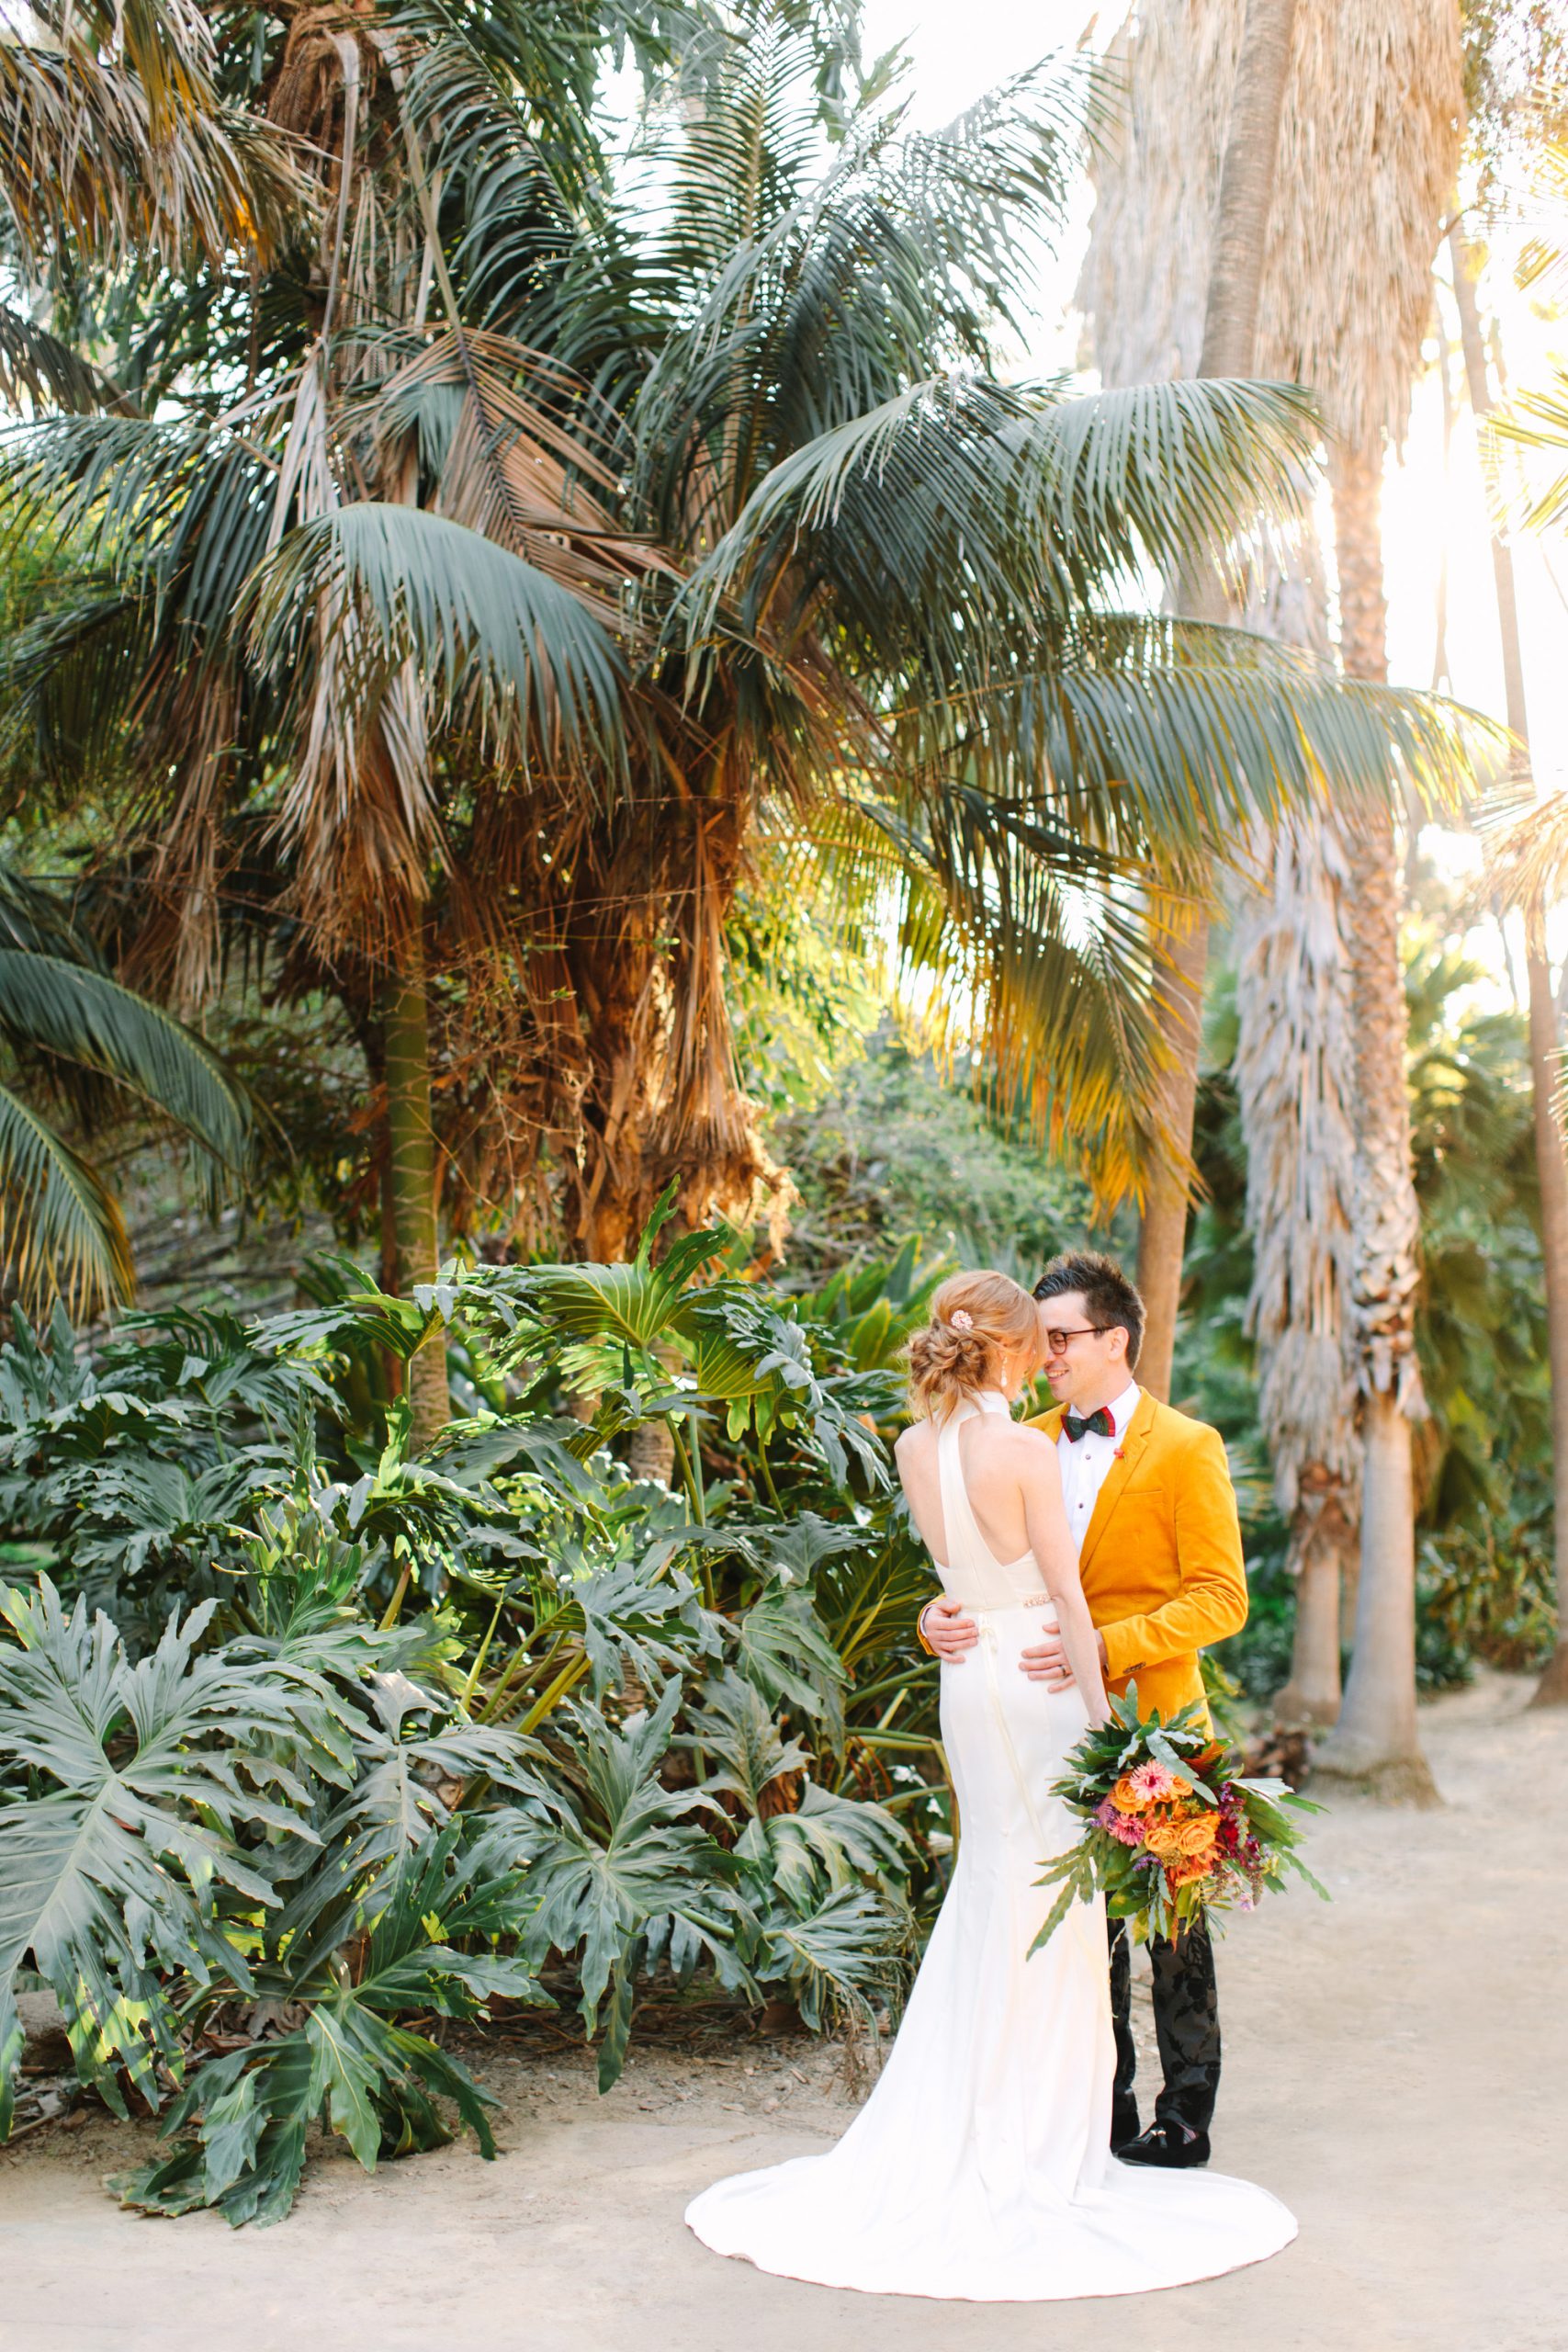 Couple embracing in palm garden - www.marycostaweddings.com